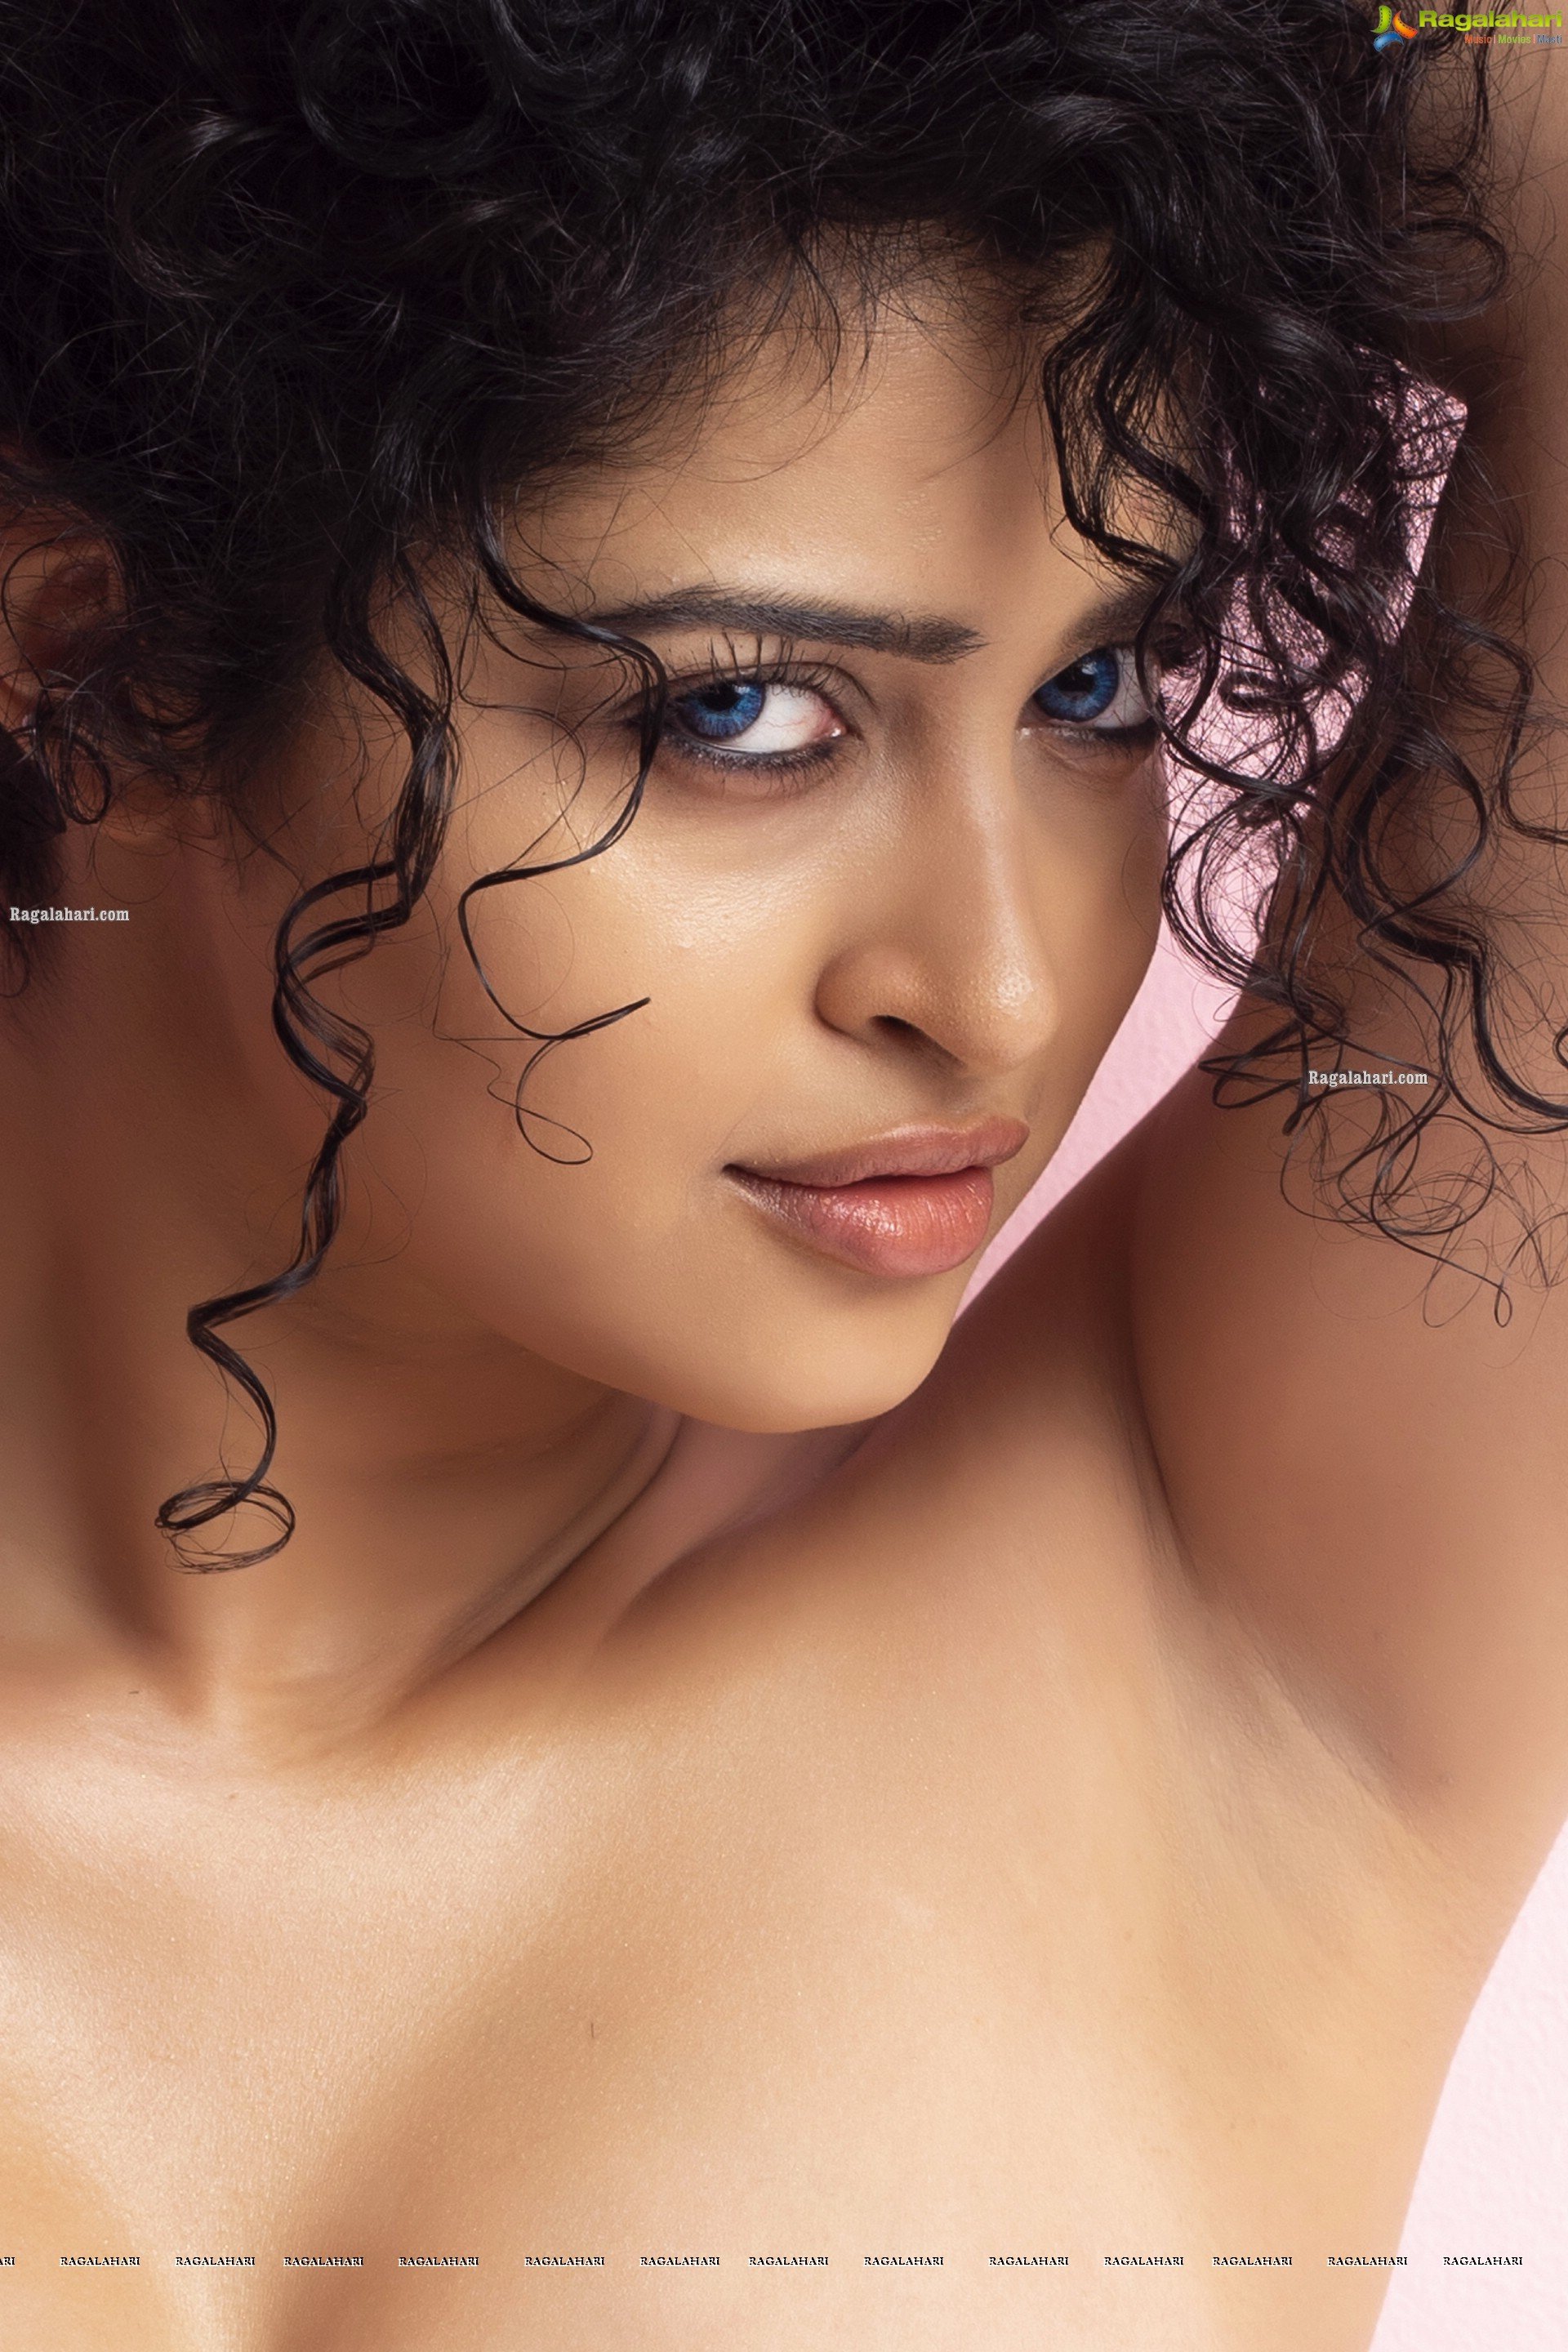 Apsara Rani Latest Hot Photoshoot Images - HD Gallery